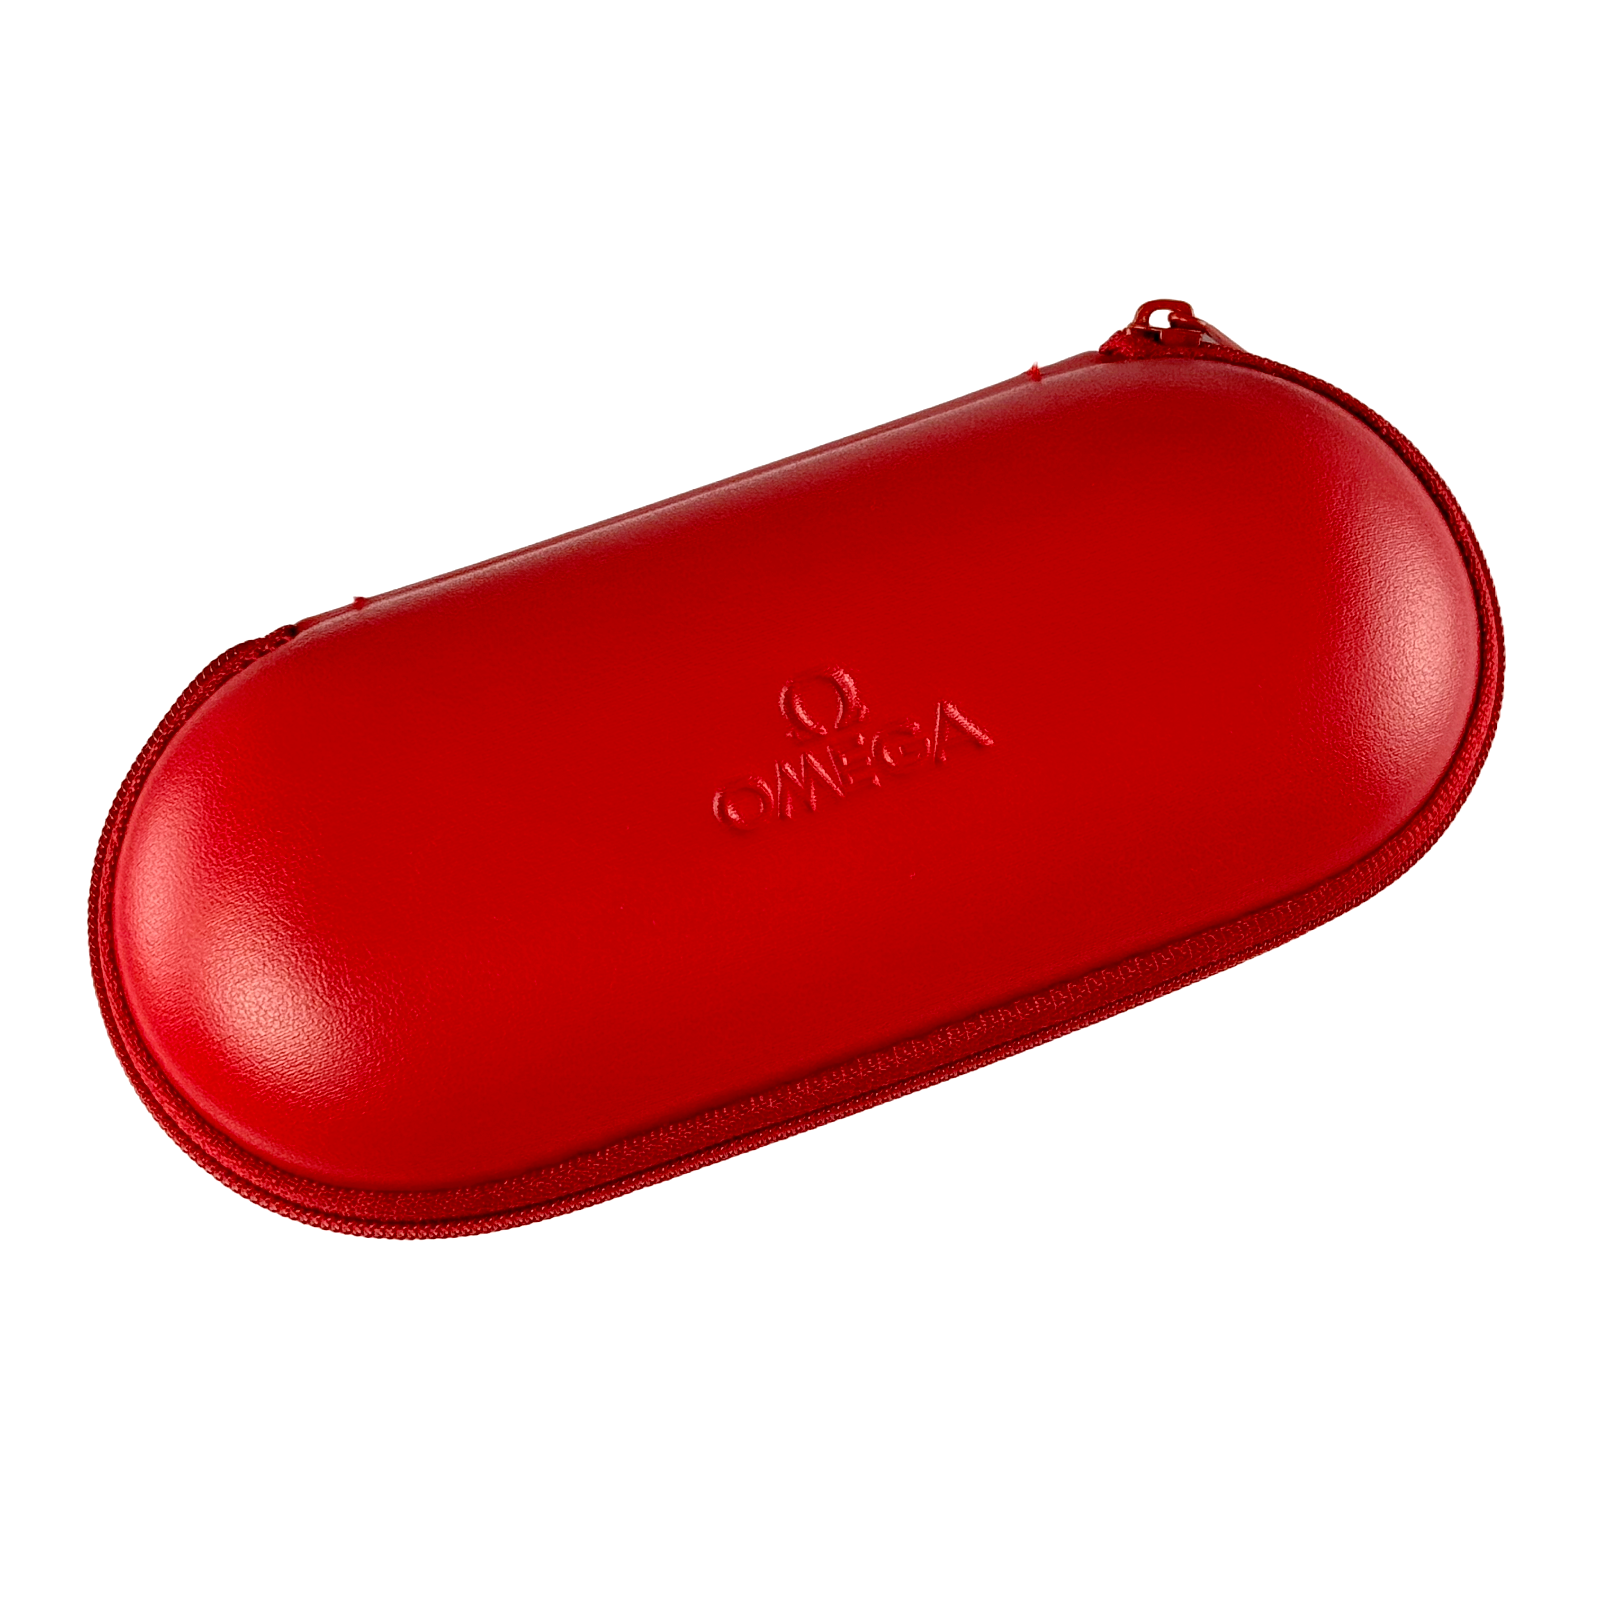  Omega Travel Case Pouch Service Etui Reiseetui Reisebox Box Uhrenetui Rot Red